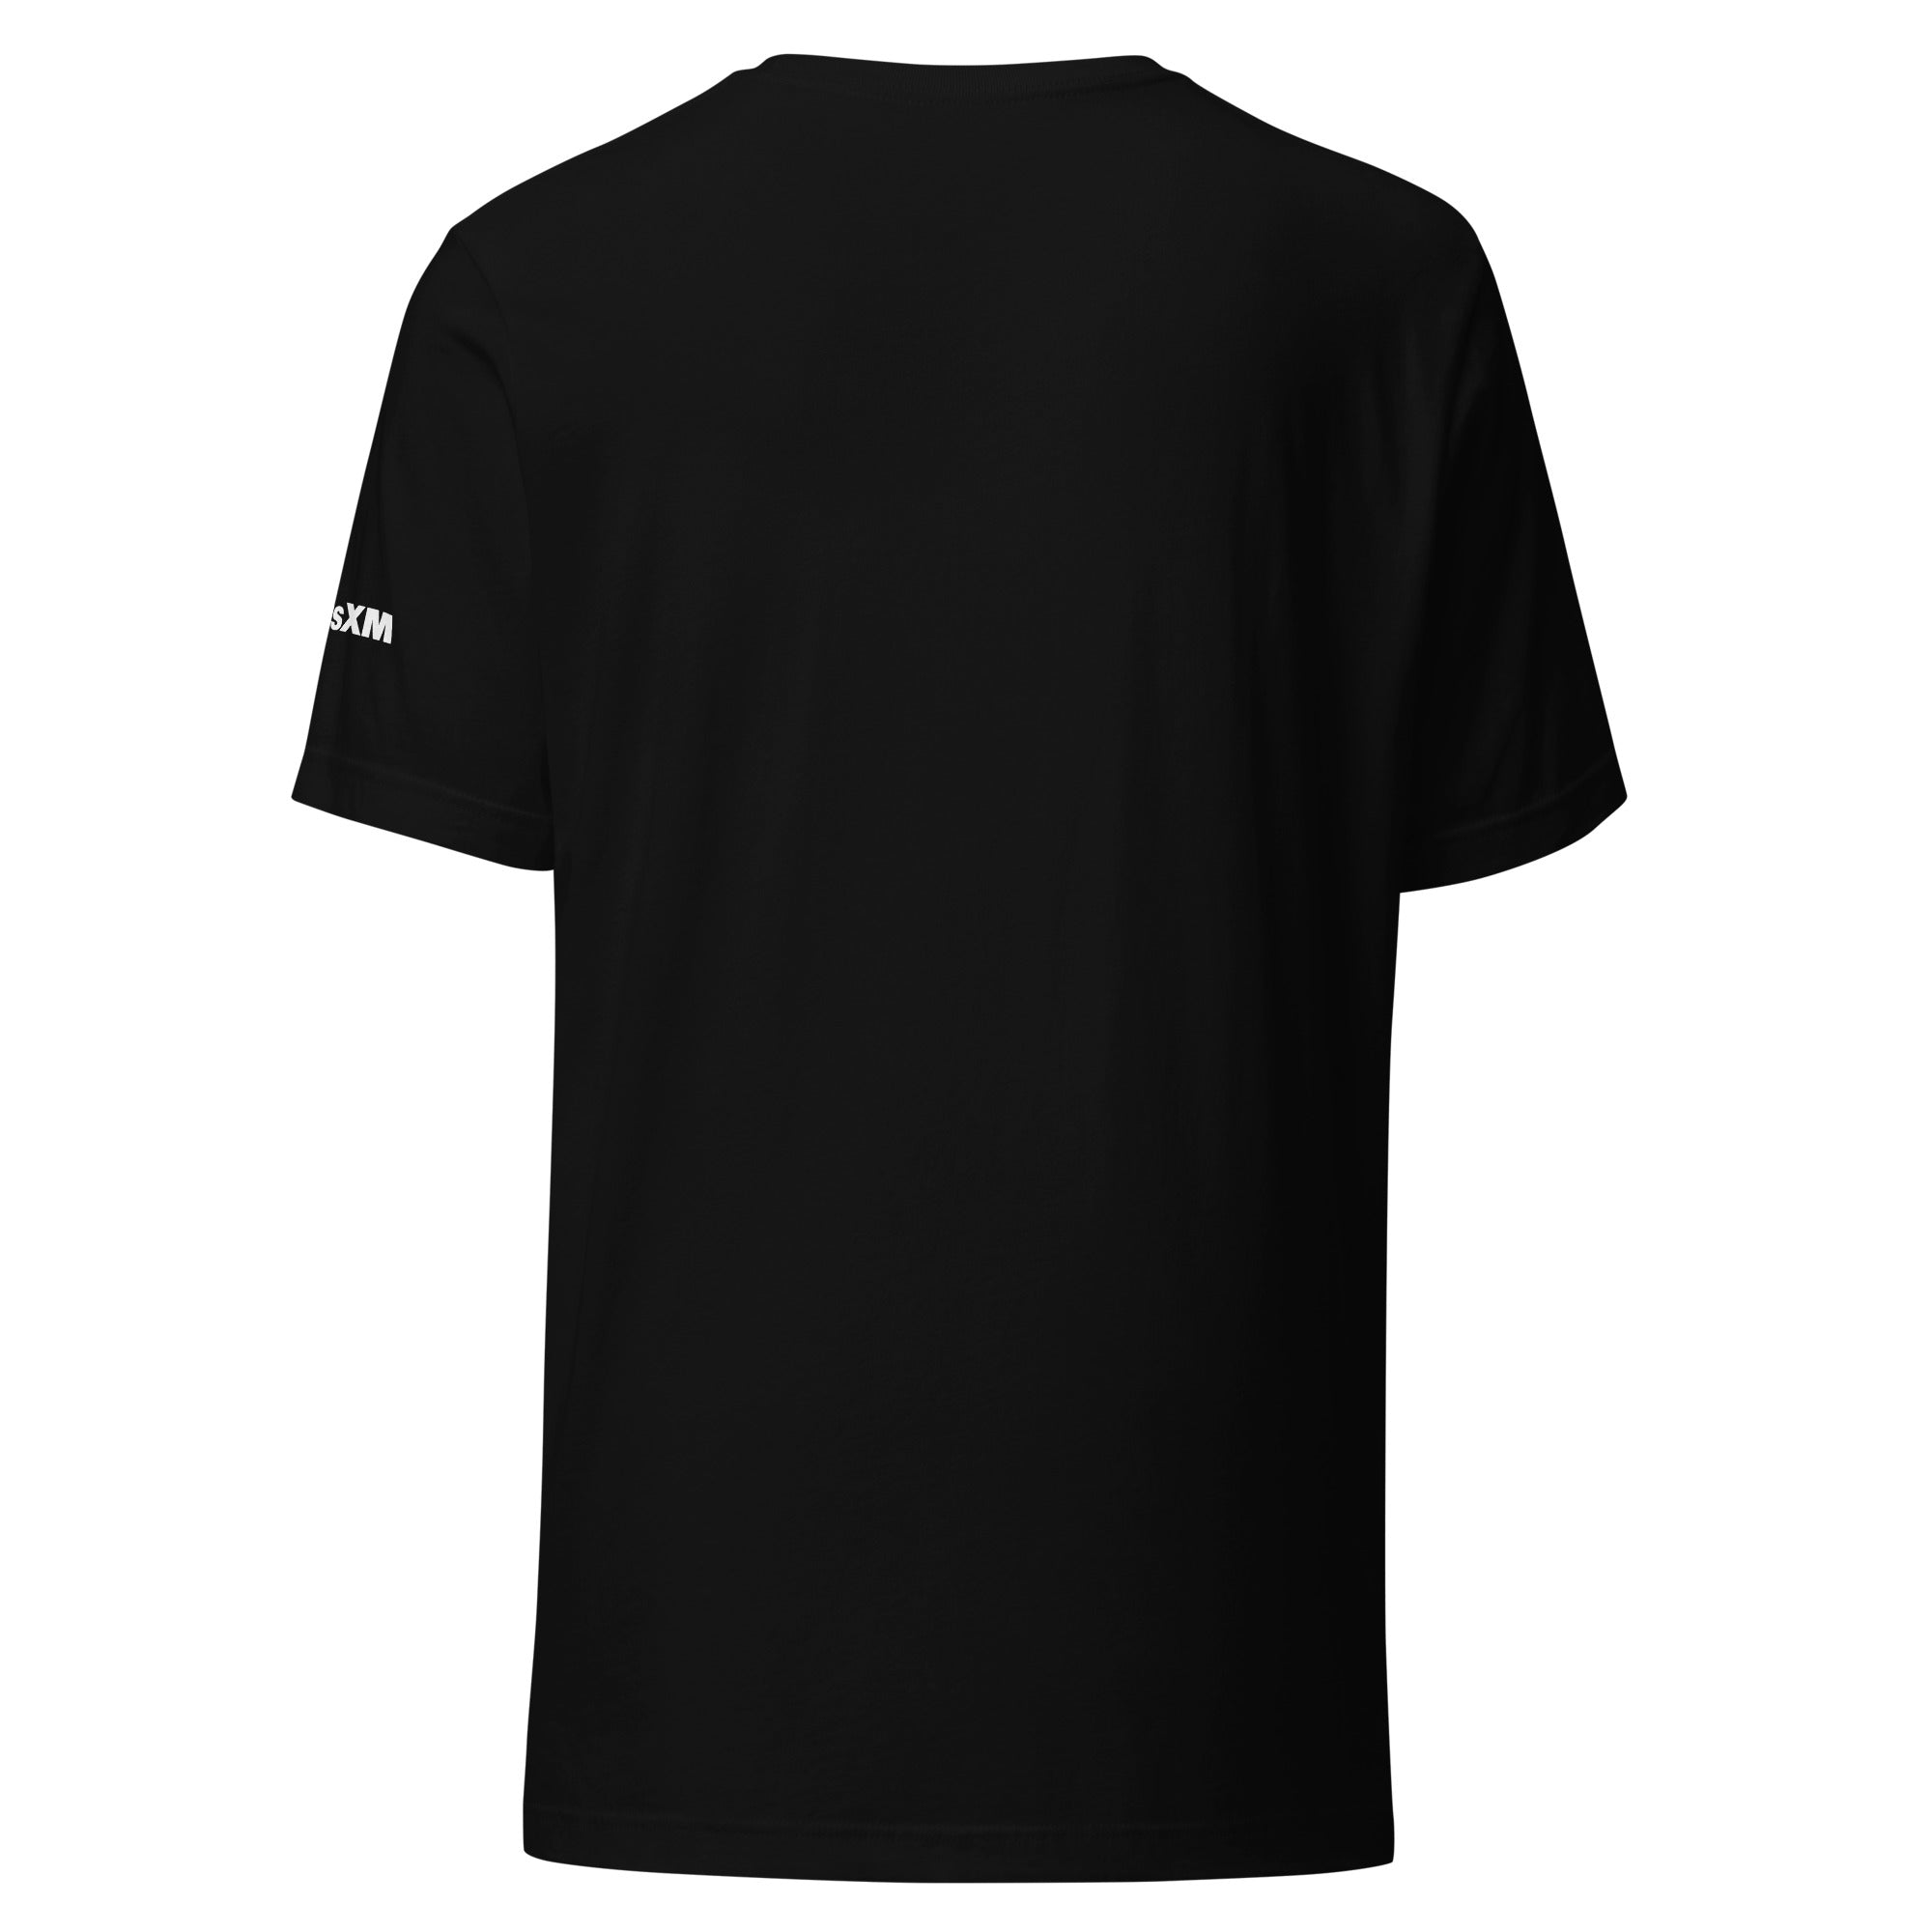 SiriusXMU: T-shirt (Black)